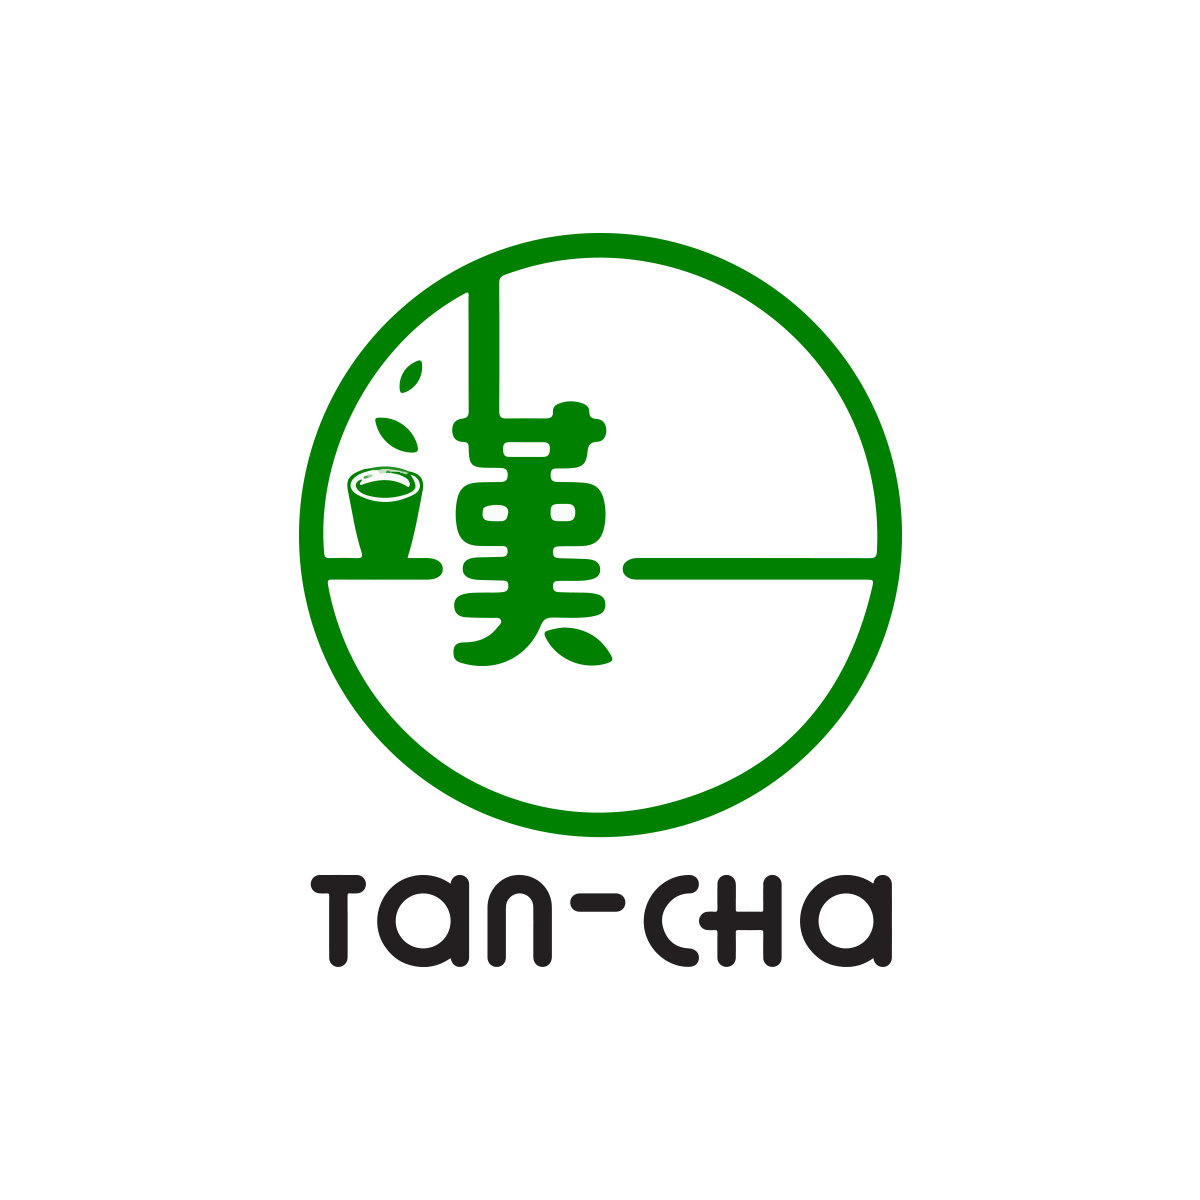 TanCha Marketing Graphics Design for TanCha